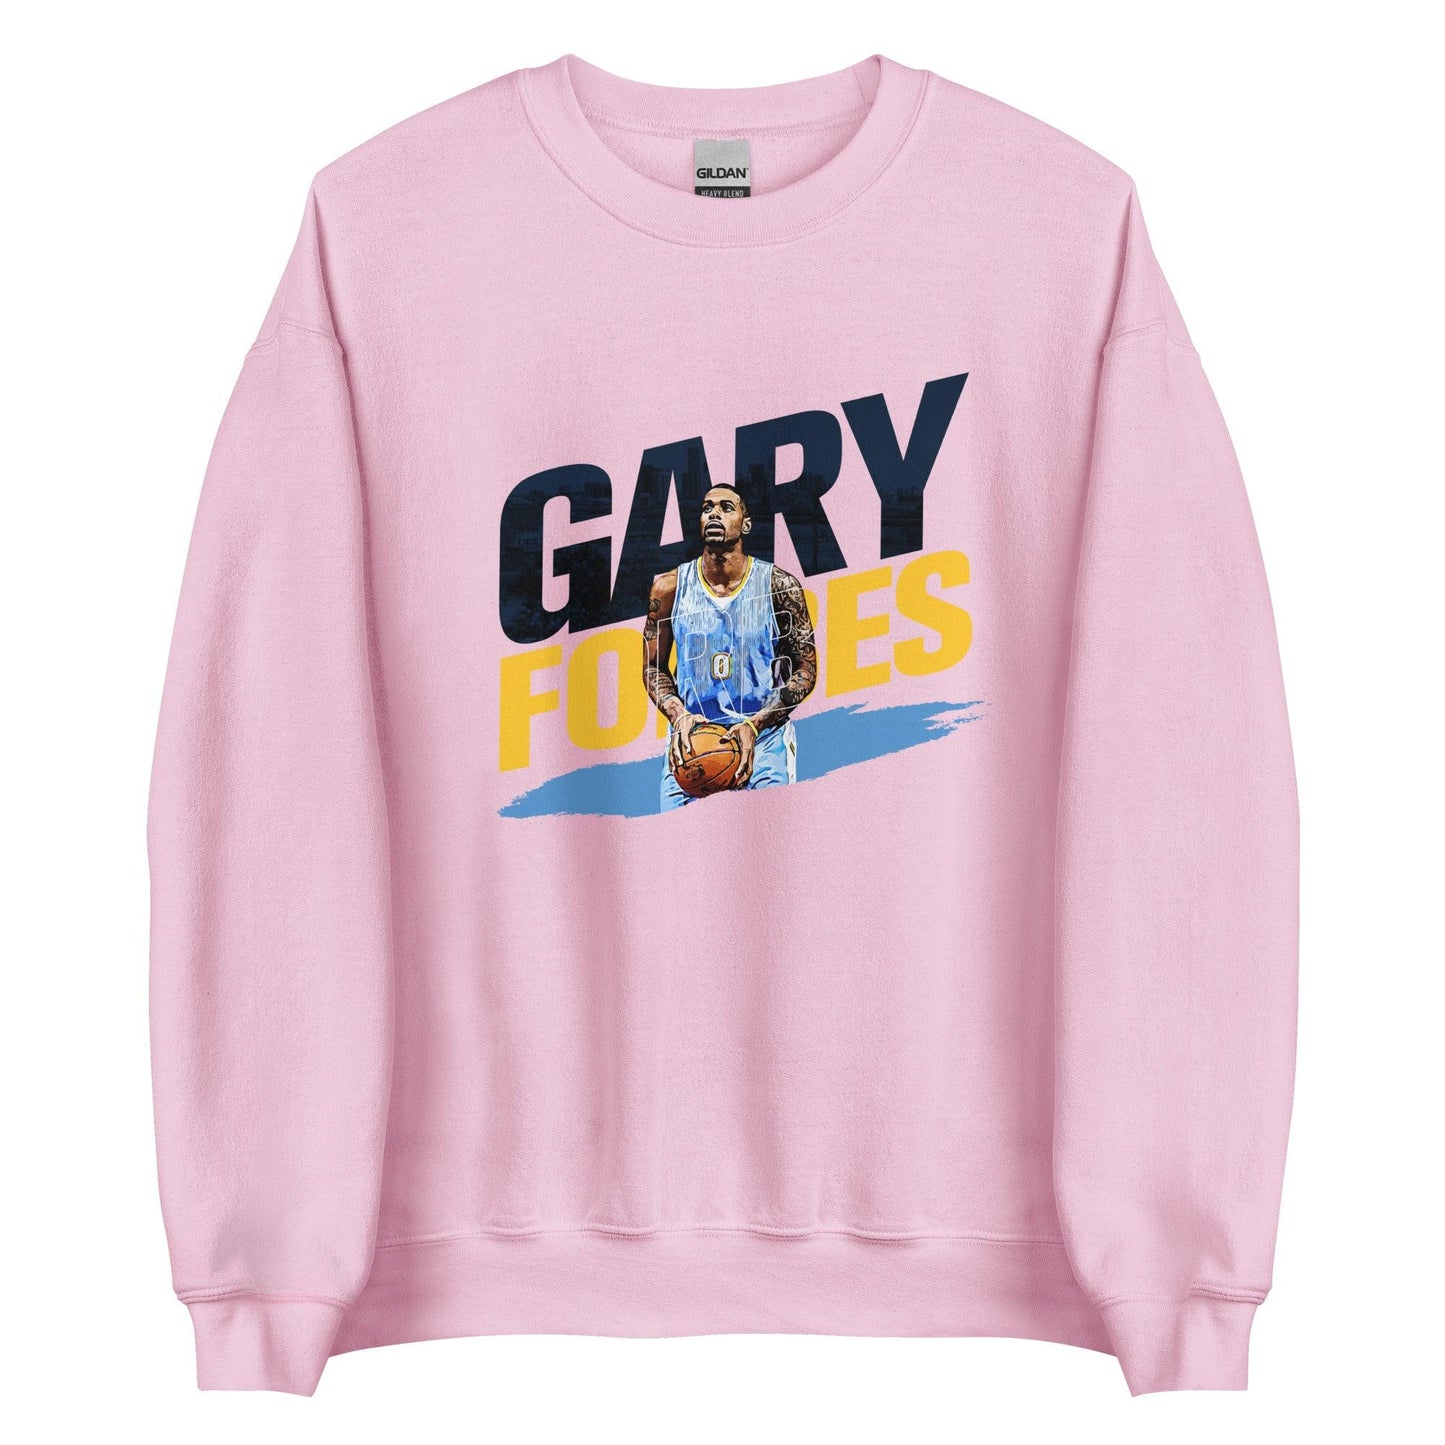 Gary Forbes "Gameday" Sweatshirt - Fan Arch